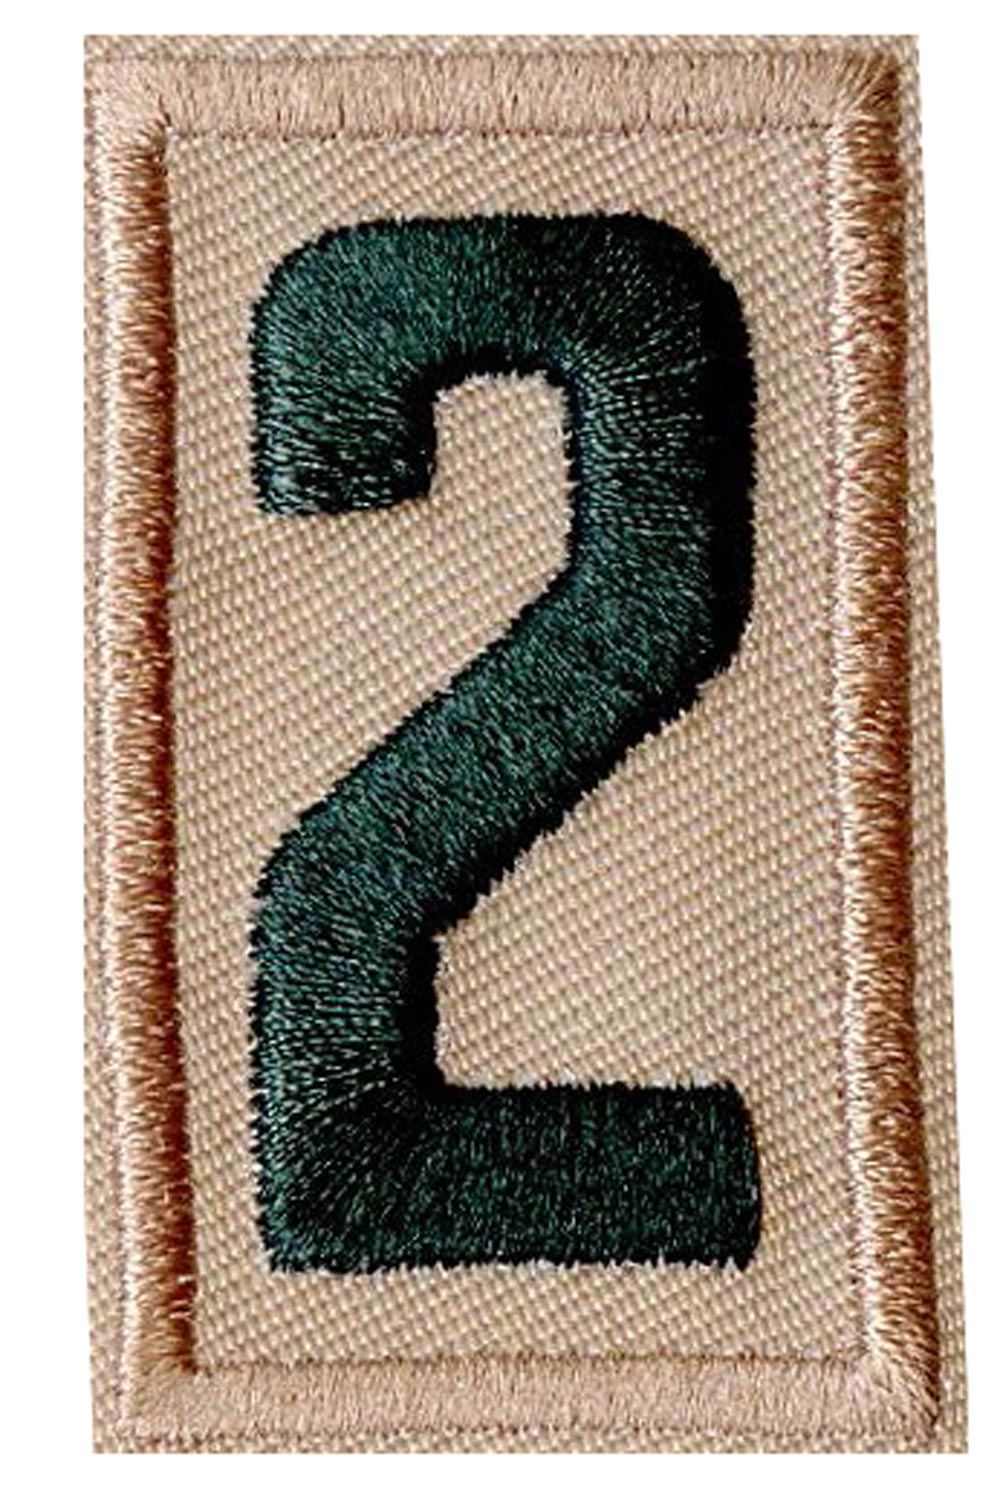 Scouts BSA Troop Unit Numeral Patch - Triple Number